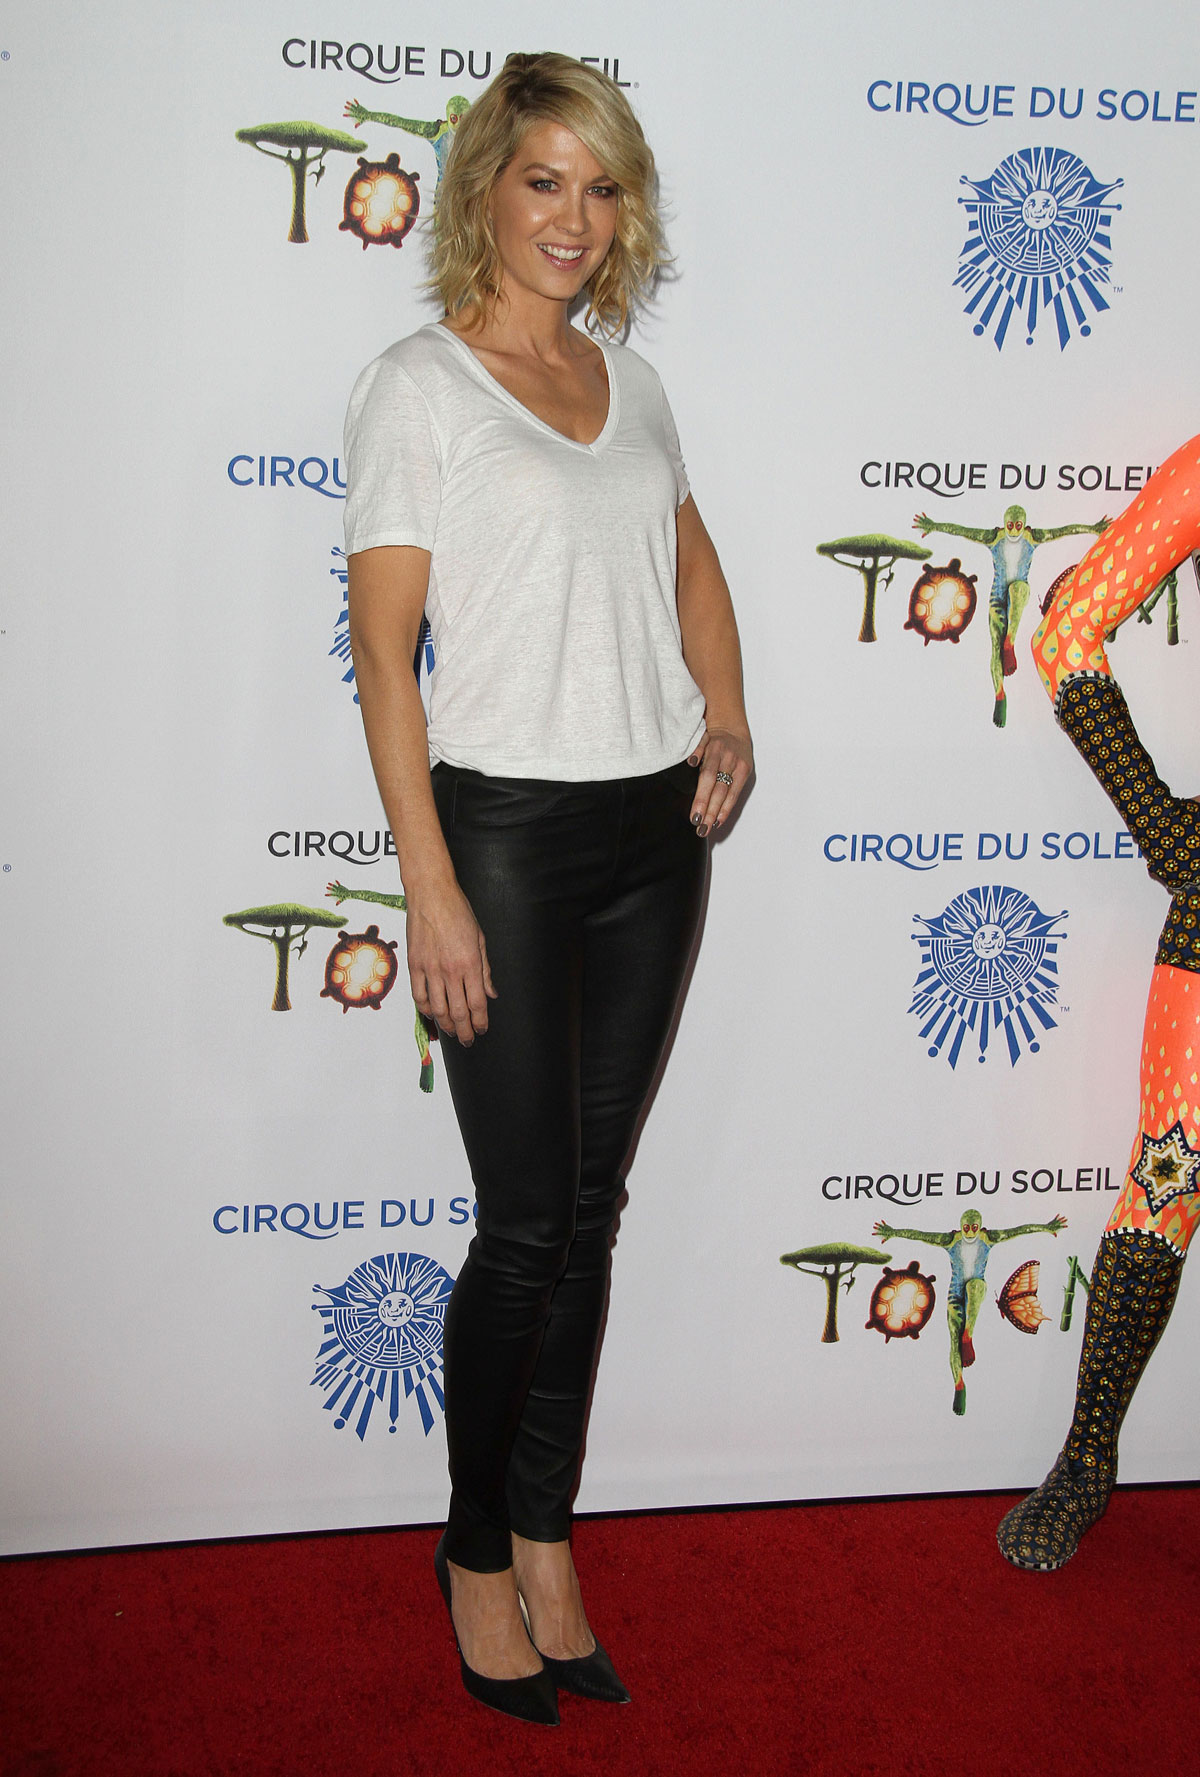 Jenna Elfman attends Opening night of Cirque du Soleil